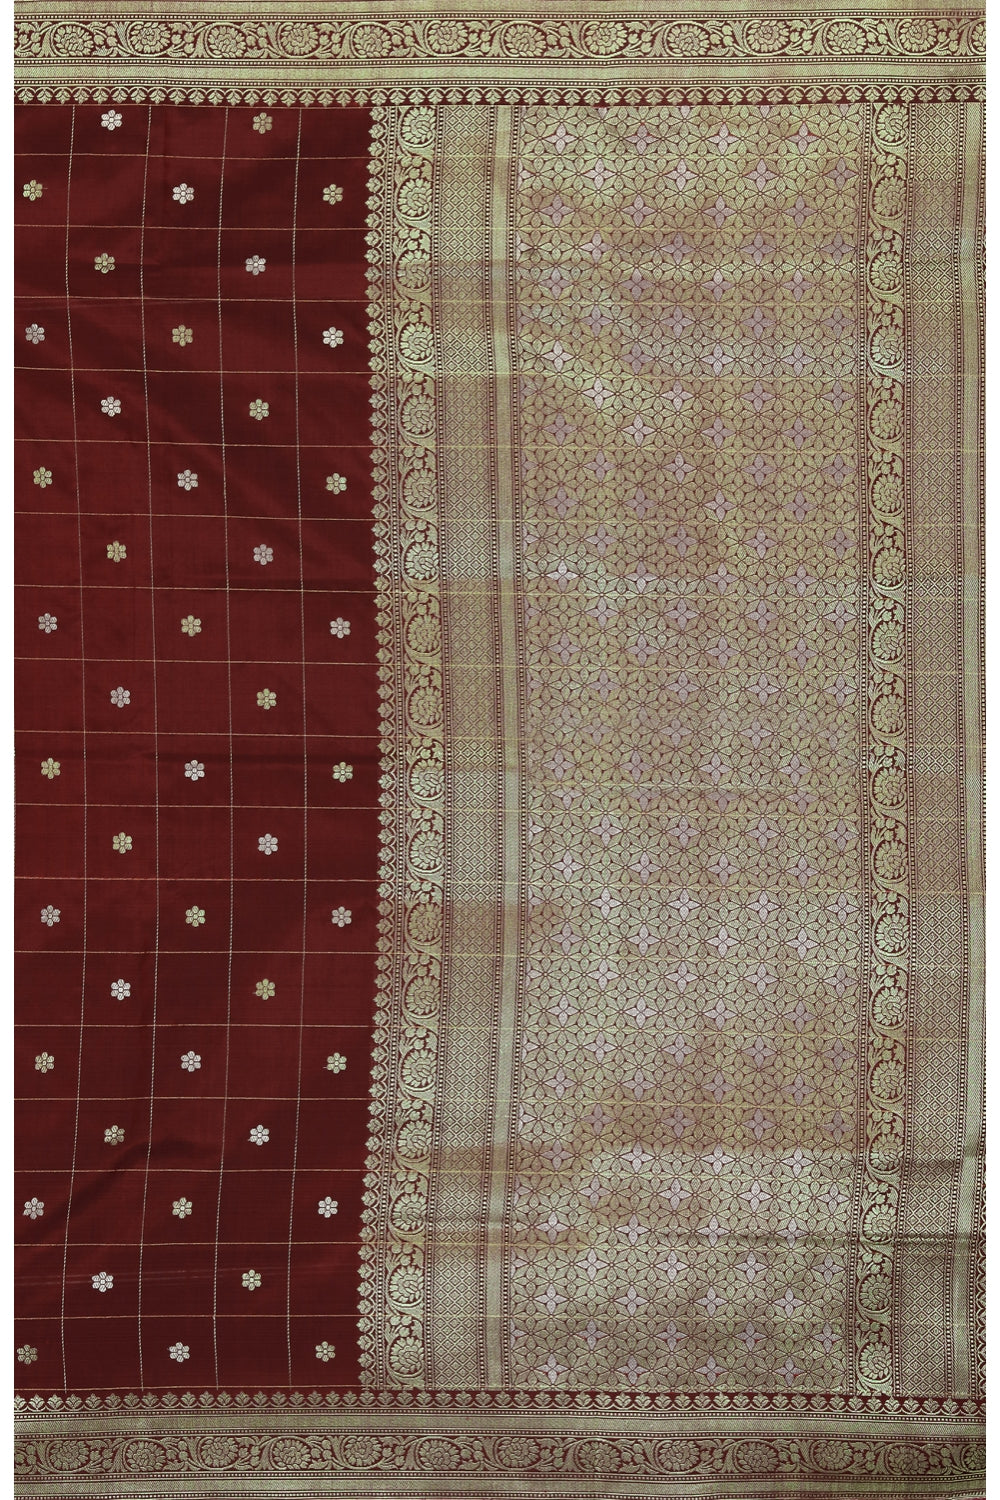 Garnet & Golden Checked Hand Loom Silk Banarasi Saree Devam